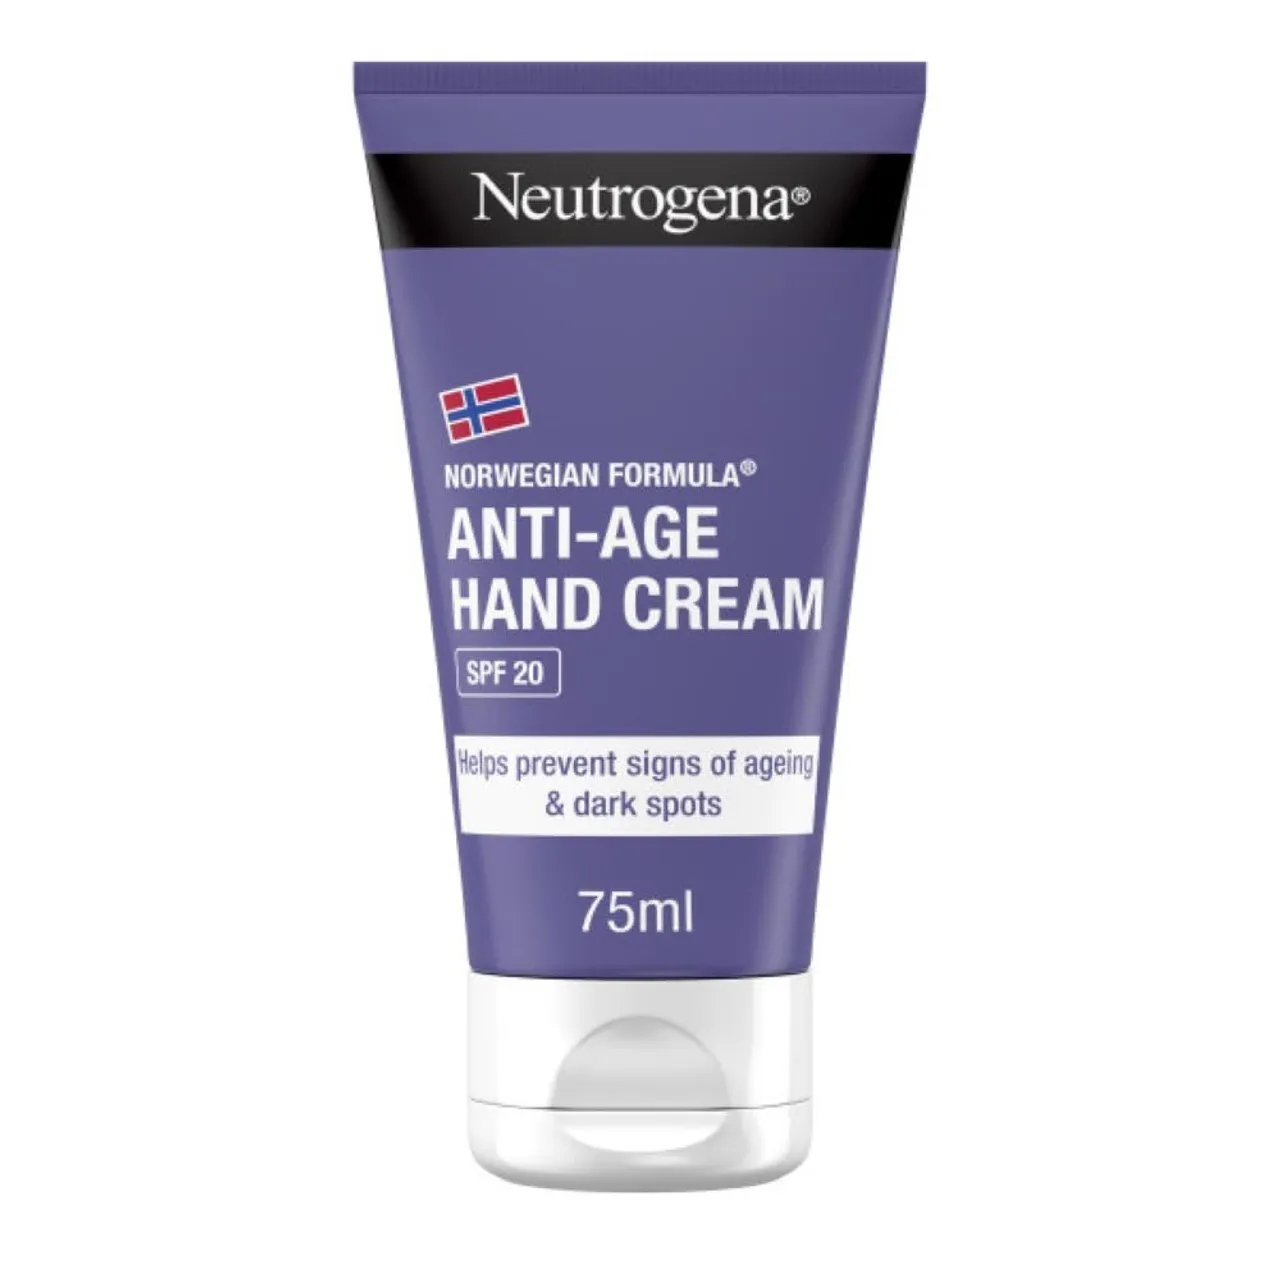 NEUTROGENA Norwegian Formula Anti-Age Hand Cream SPF20 75ml